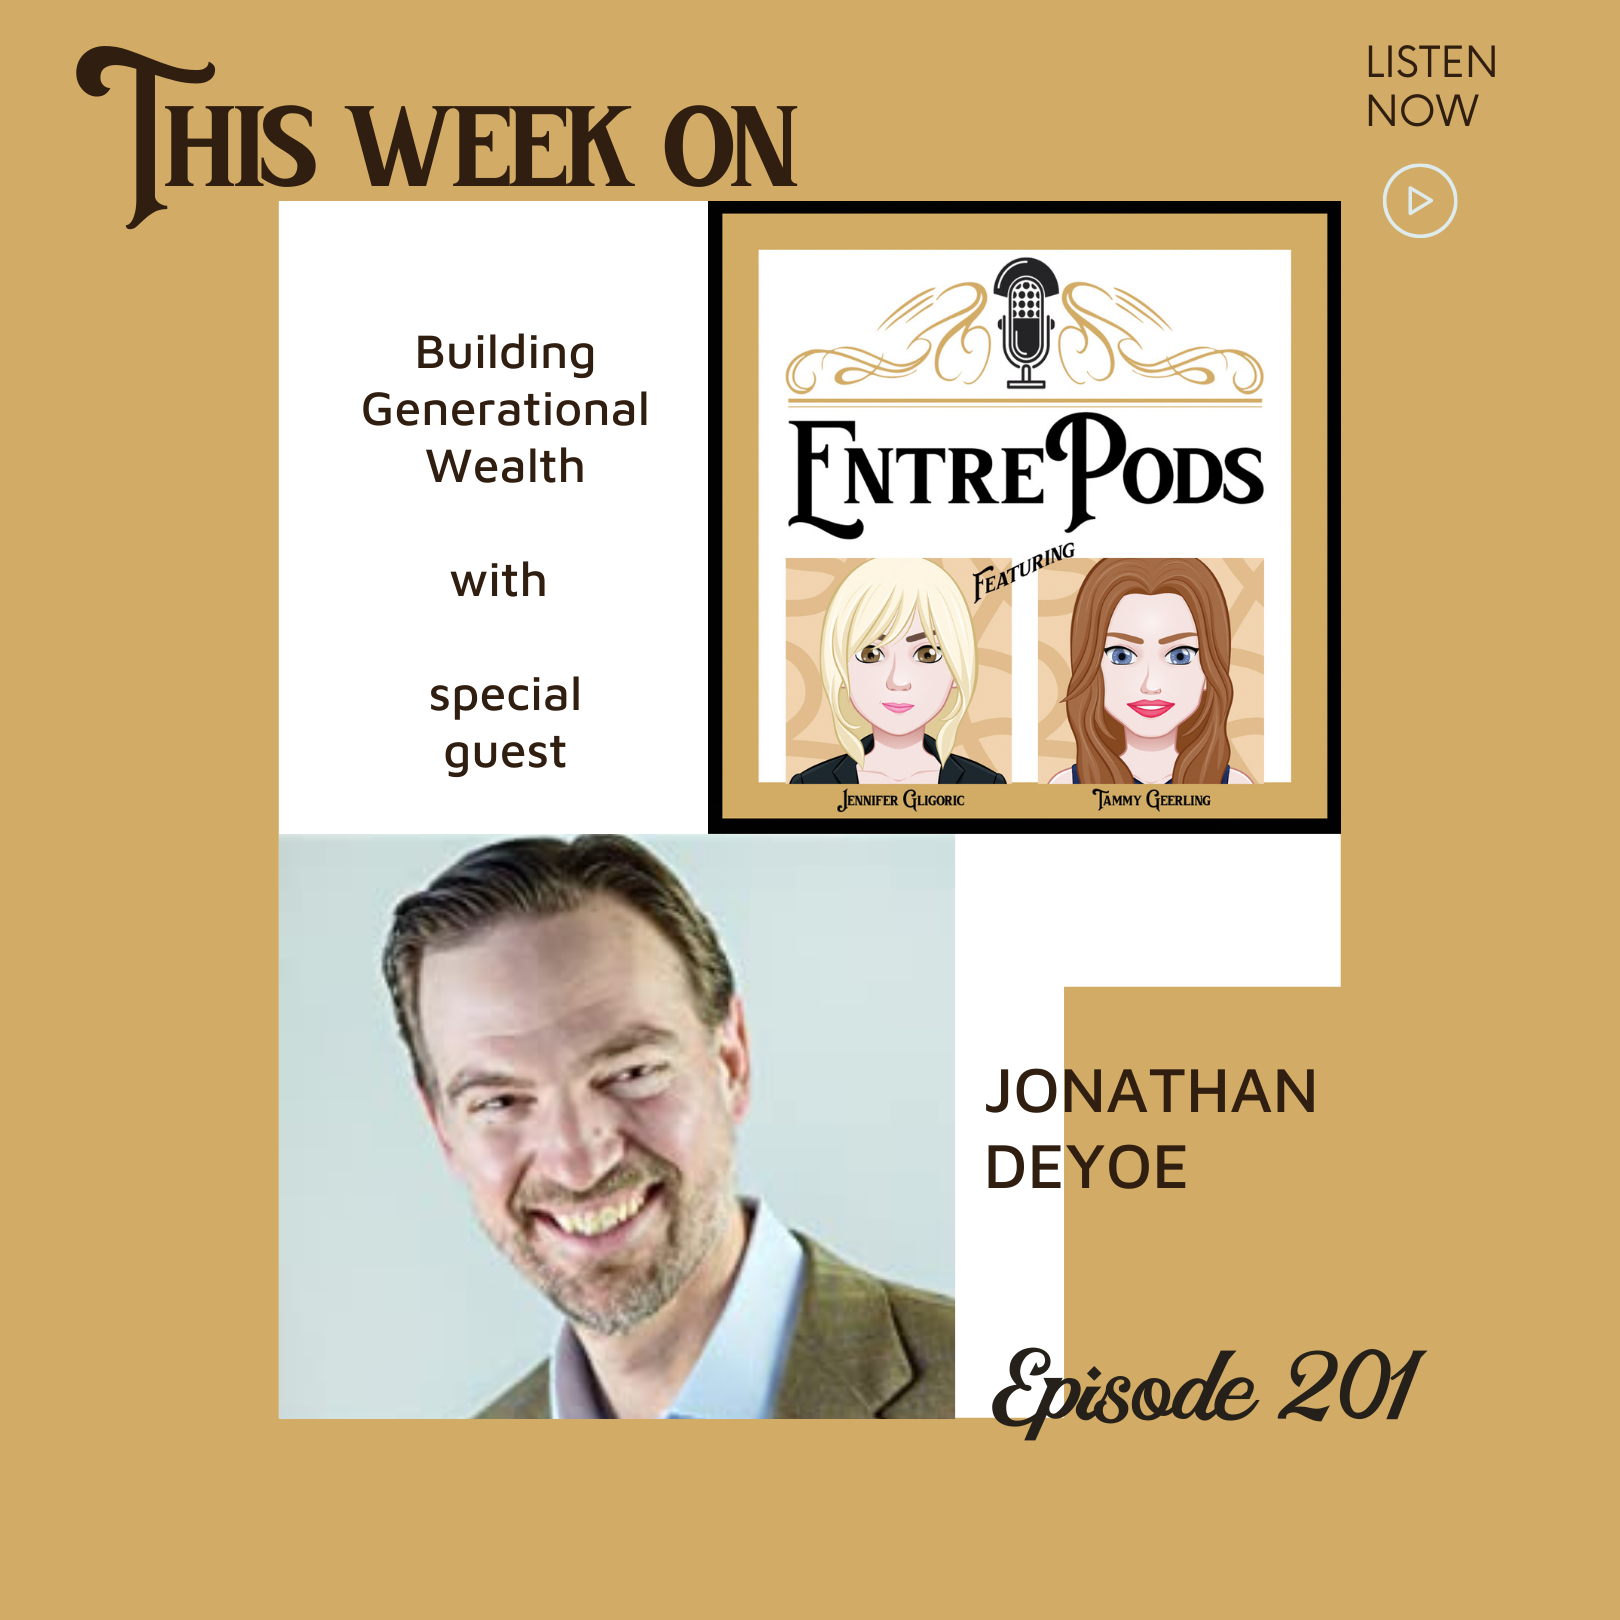 EntrePods Episode 201 featuring Jonathan DeYoe, Building Generational Wealth